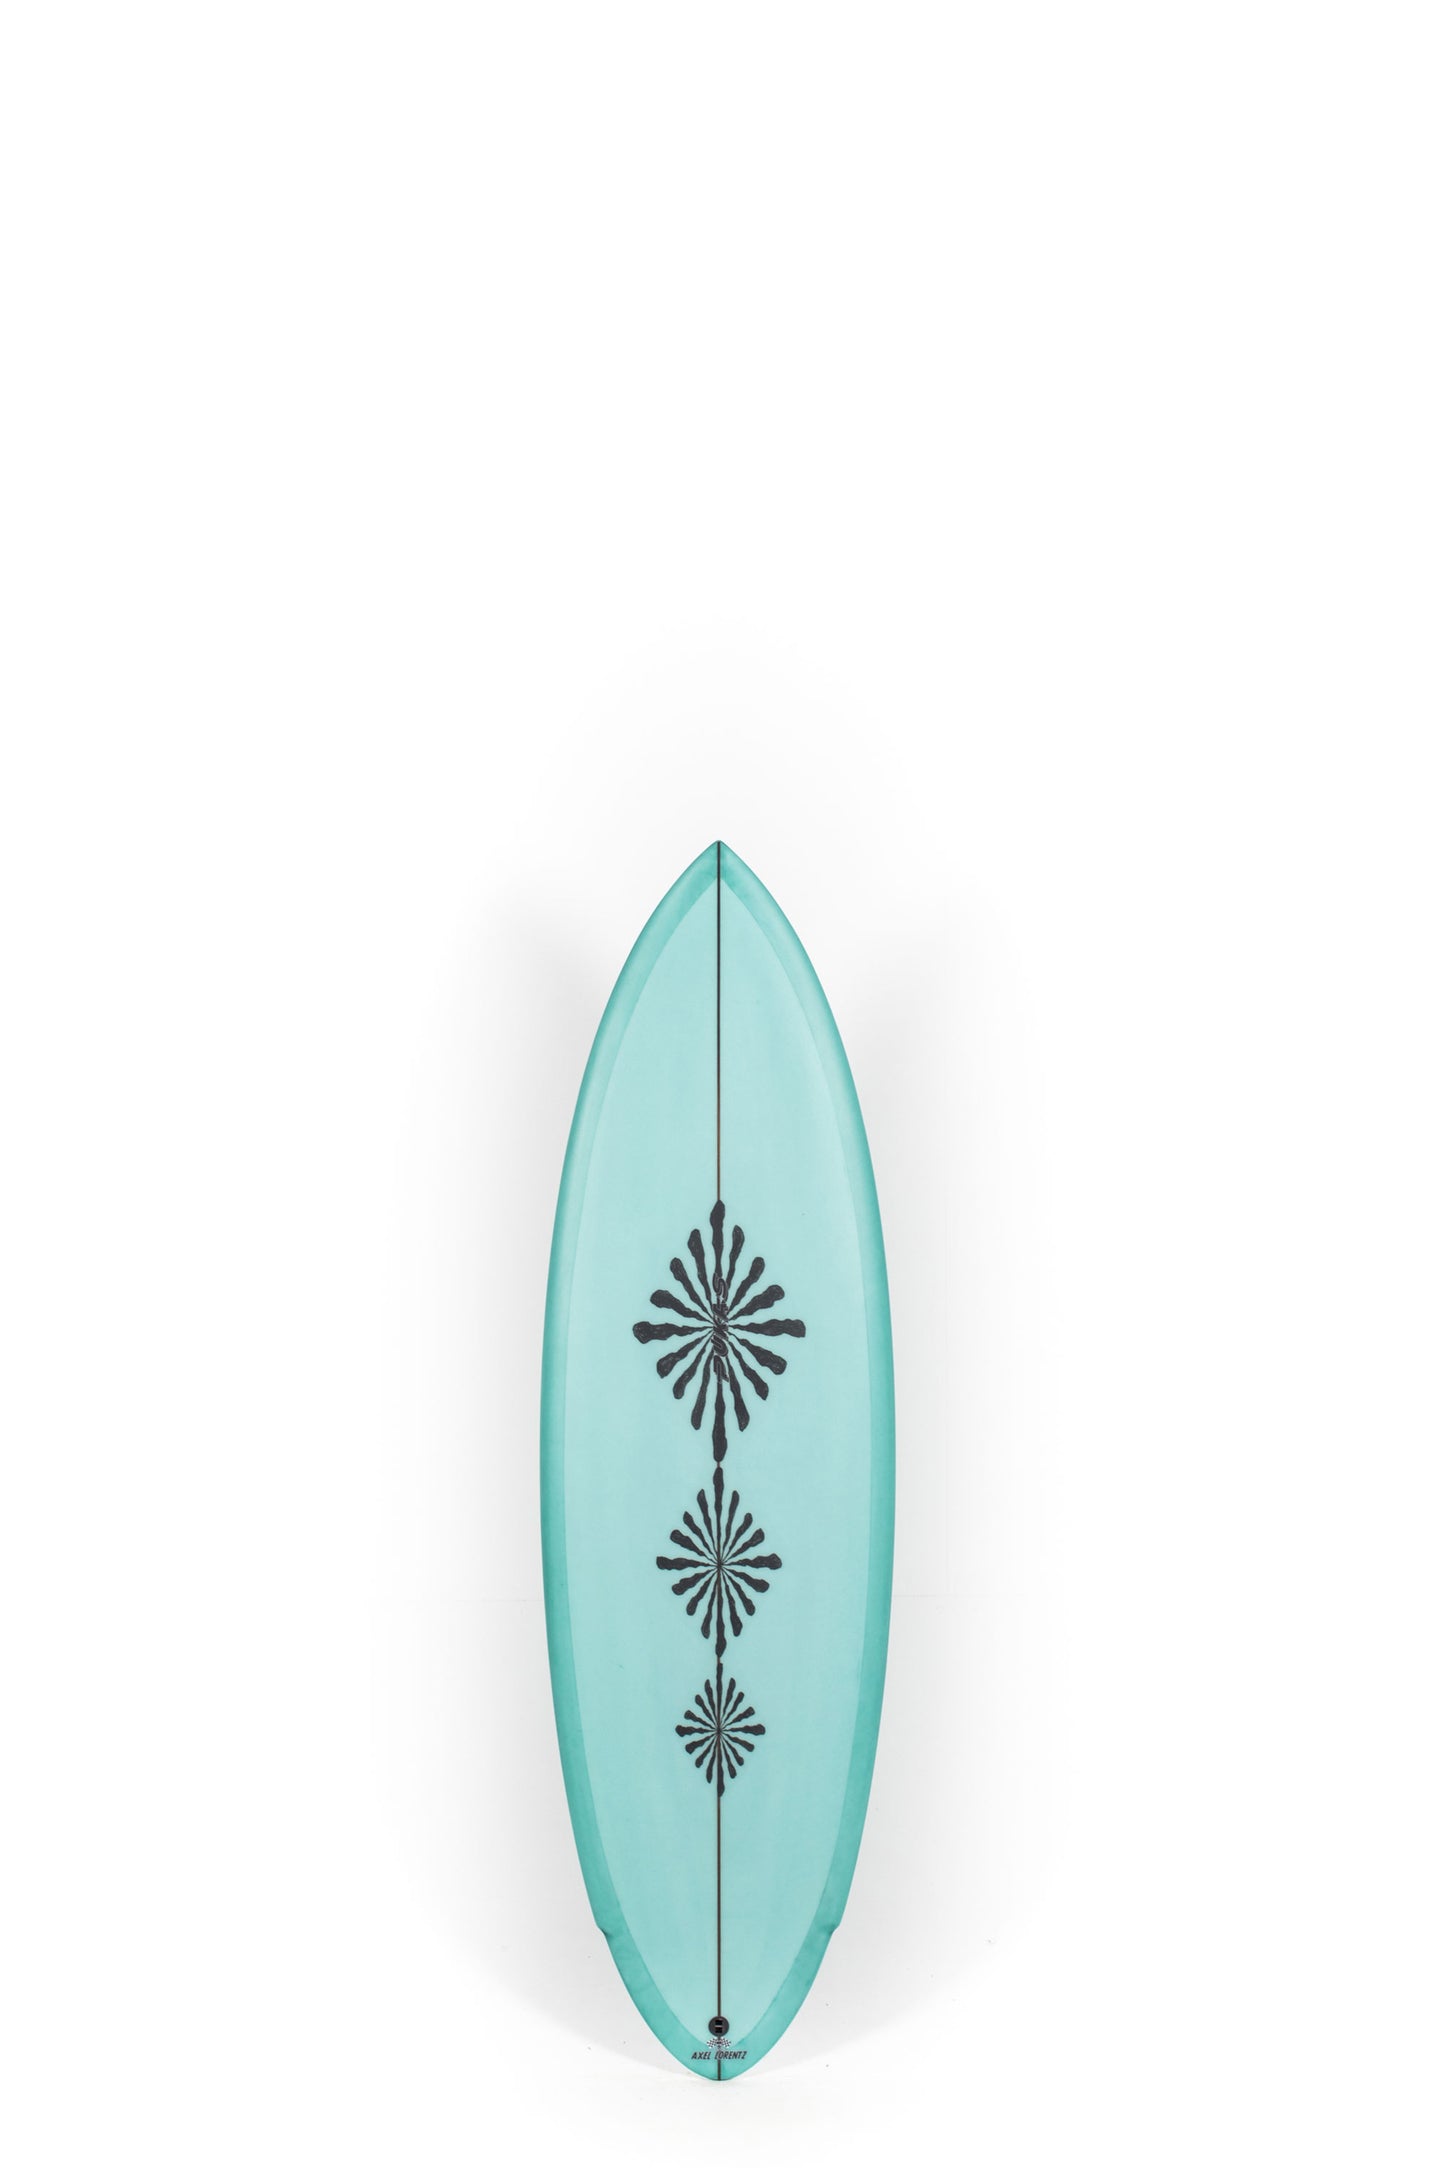 Pukas Surf Shop - Pukas Surfboards - ACID PLAN by Axel Lorentz - 5'5" x 19 x 2,30 x 25,95L - AX09192